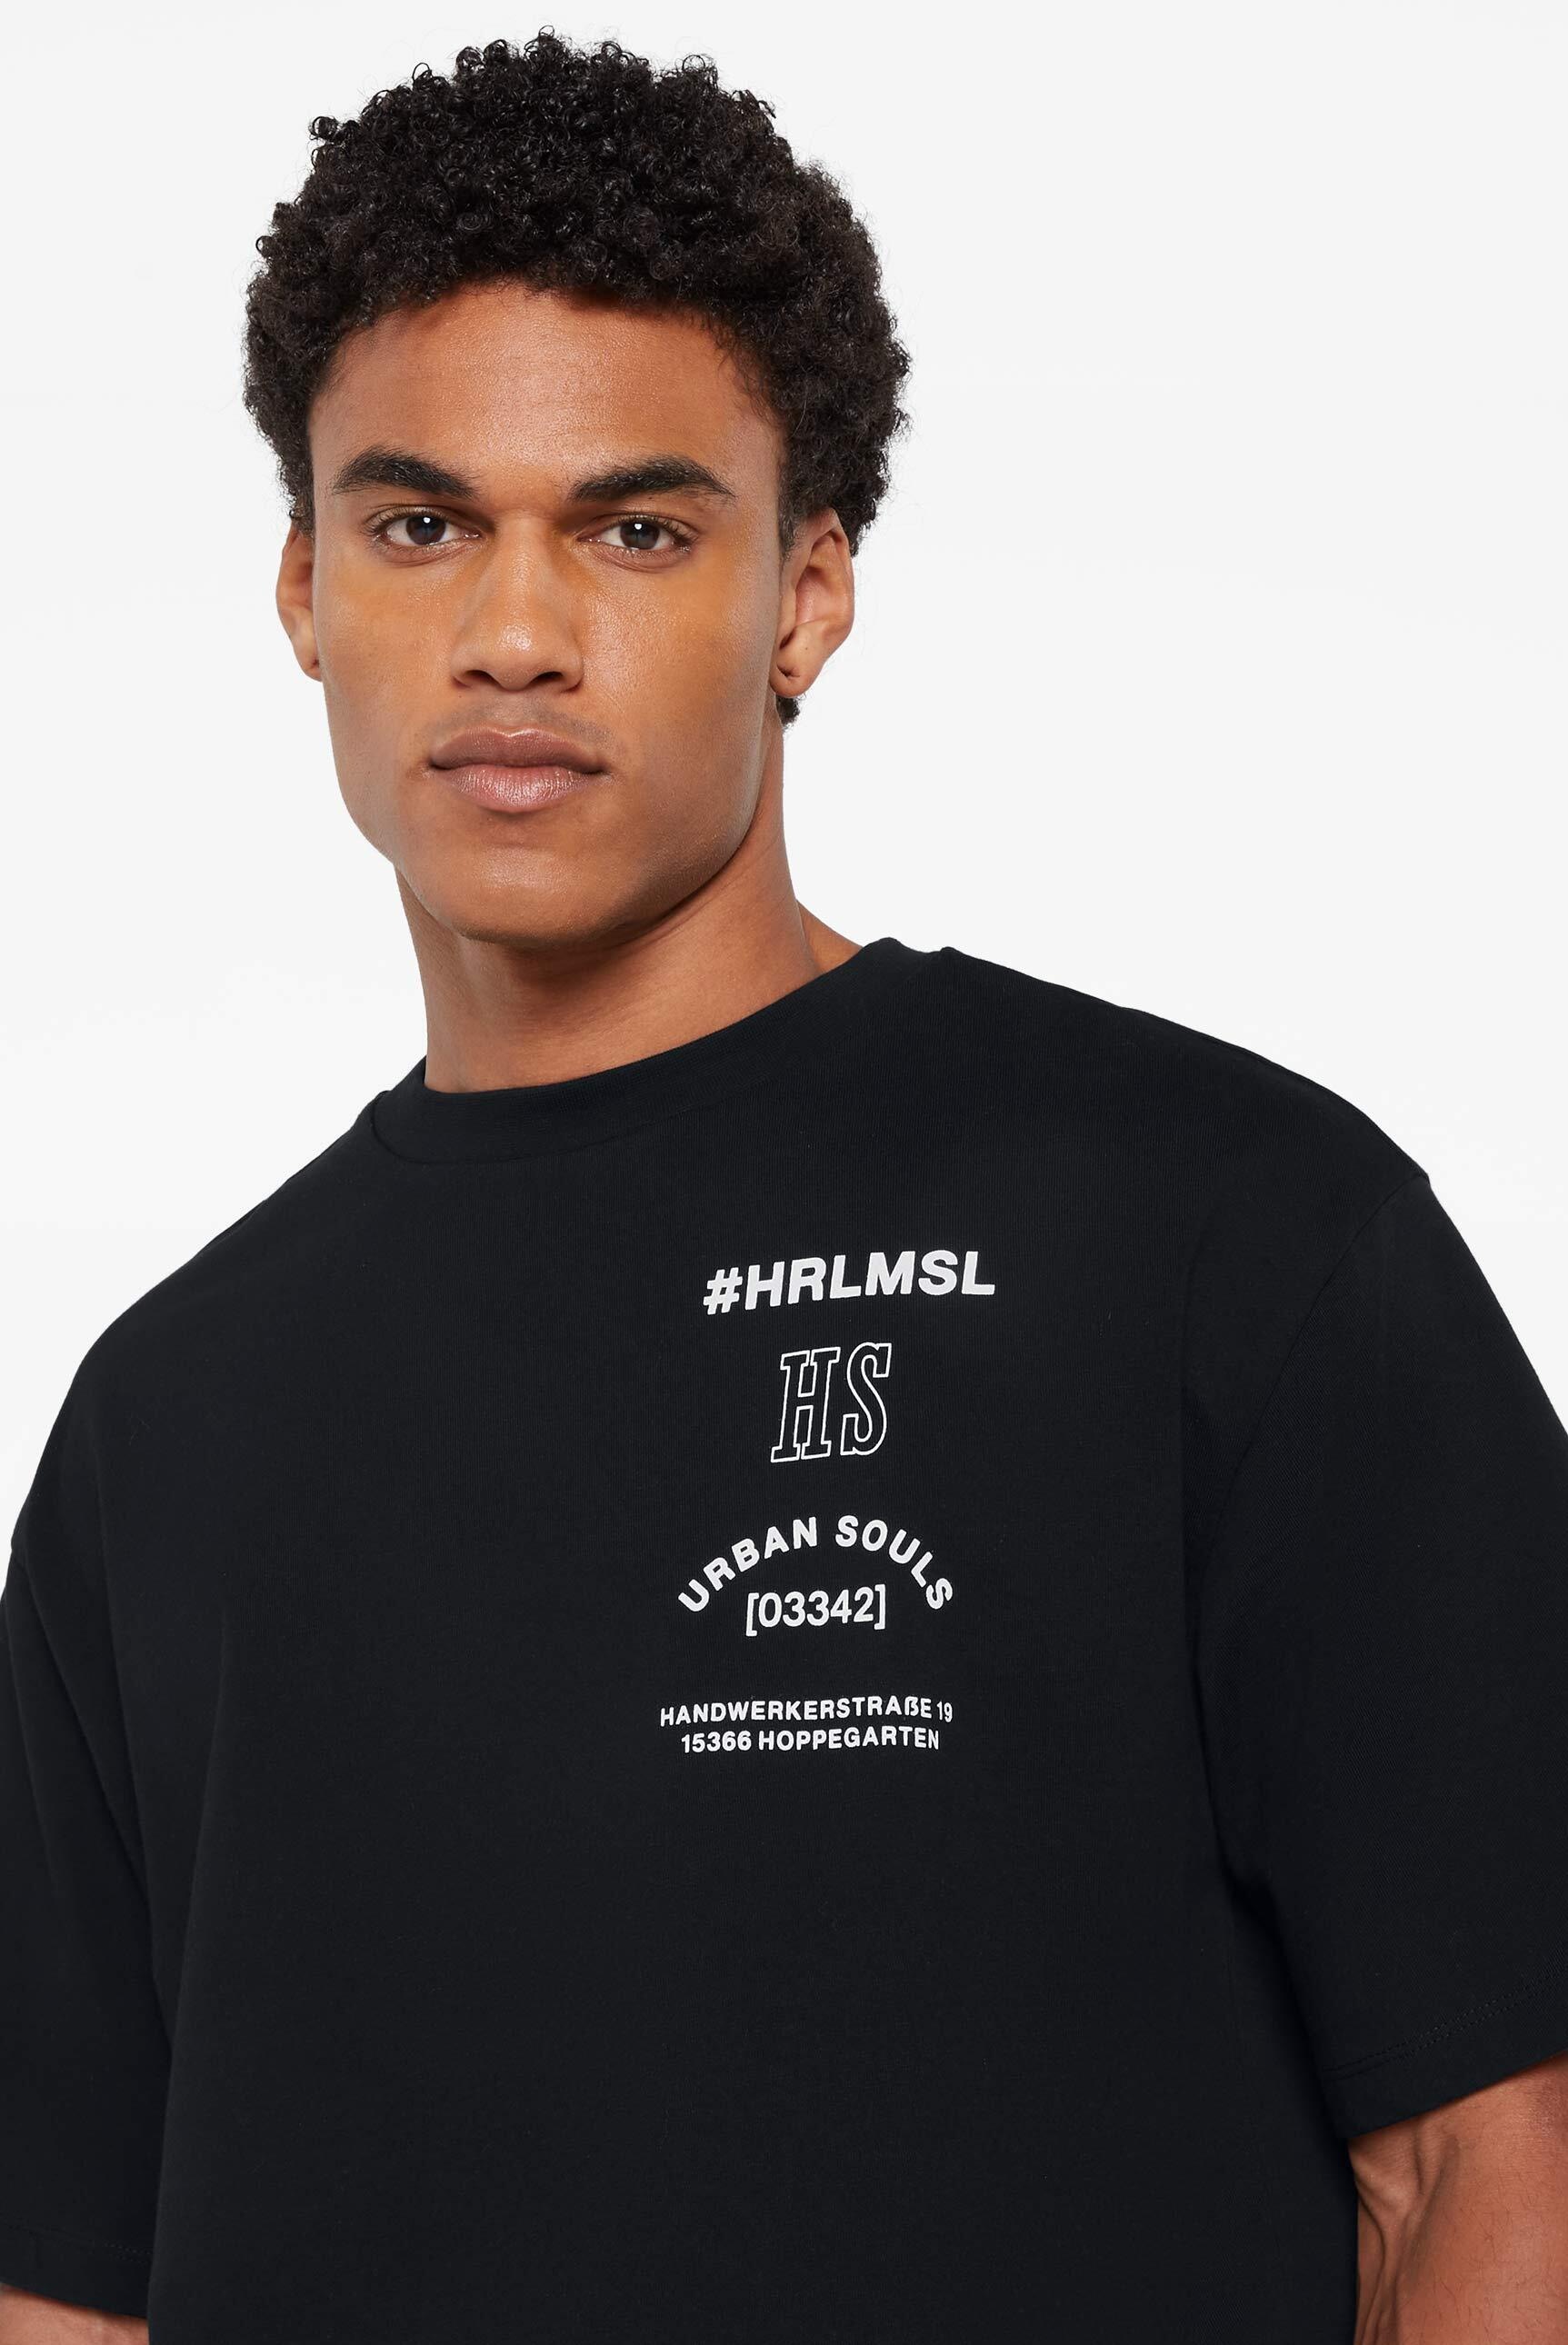 Harlem Soul Rundhalsshirt, mit großem Rücken-Print